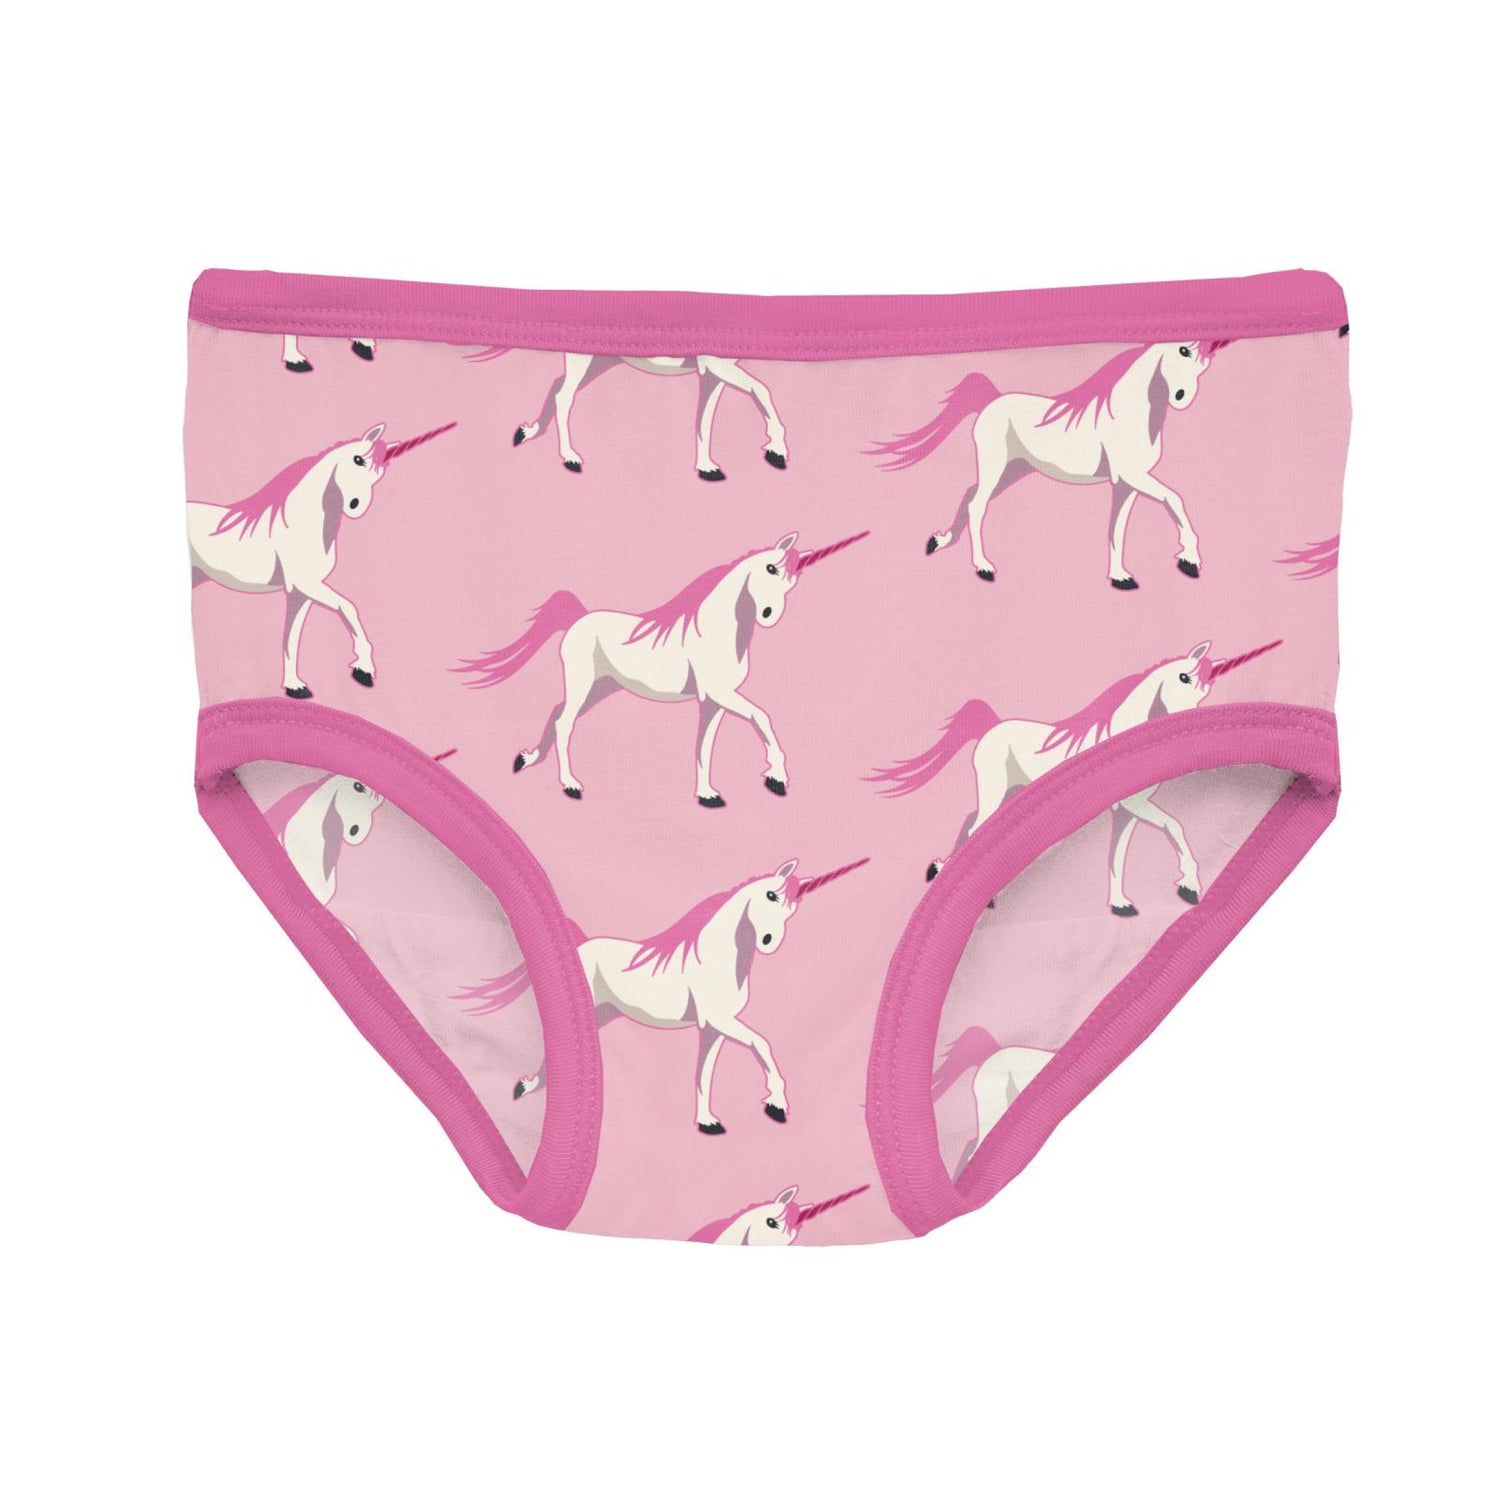 Print Girl's Underwear in Cake Pop Prancing Unicorn